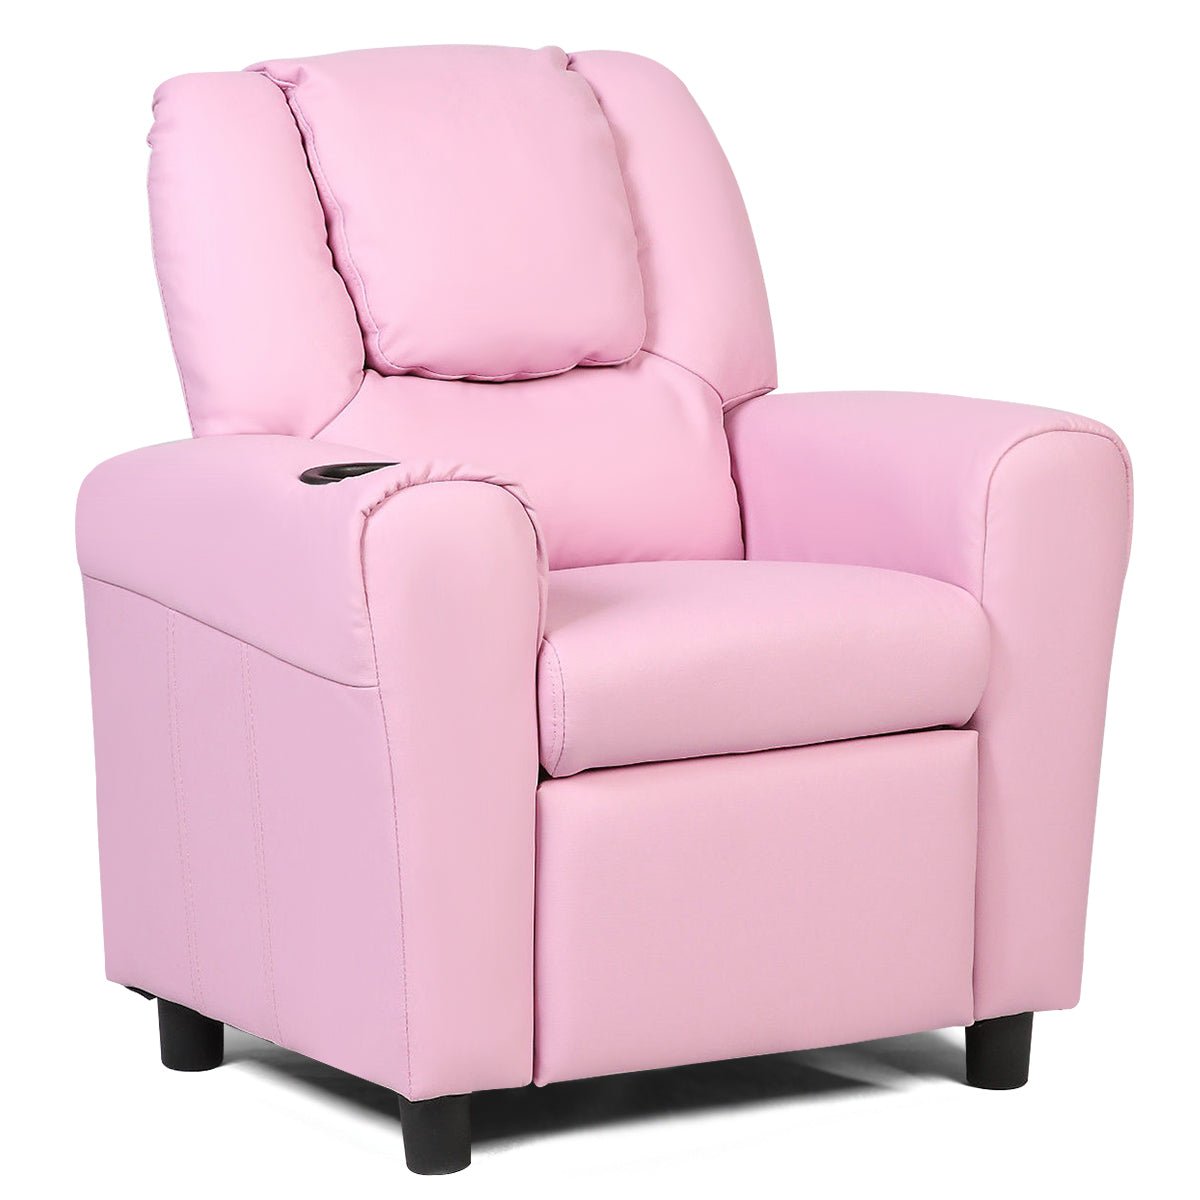 Embrace Comfort: Pink Children's Recliner Chair with Ergonomic Armrest